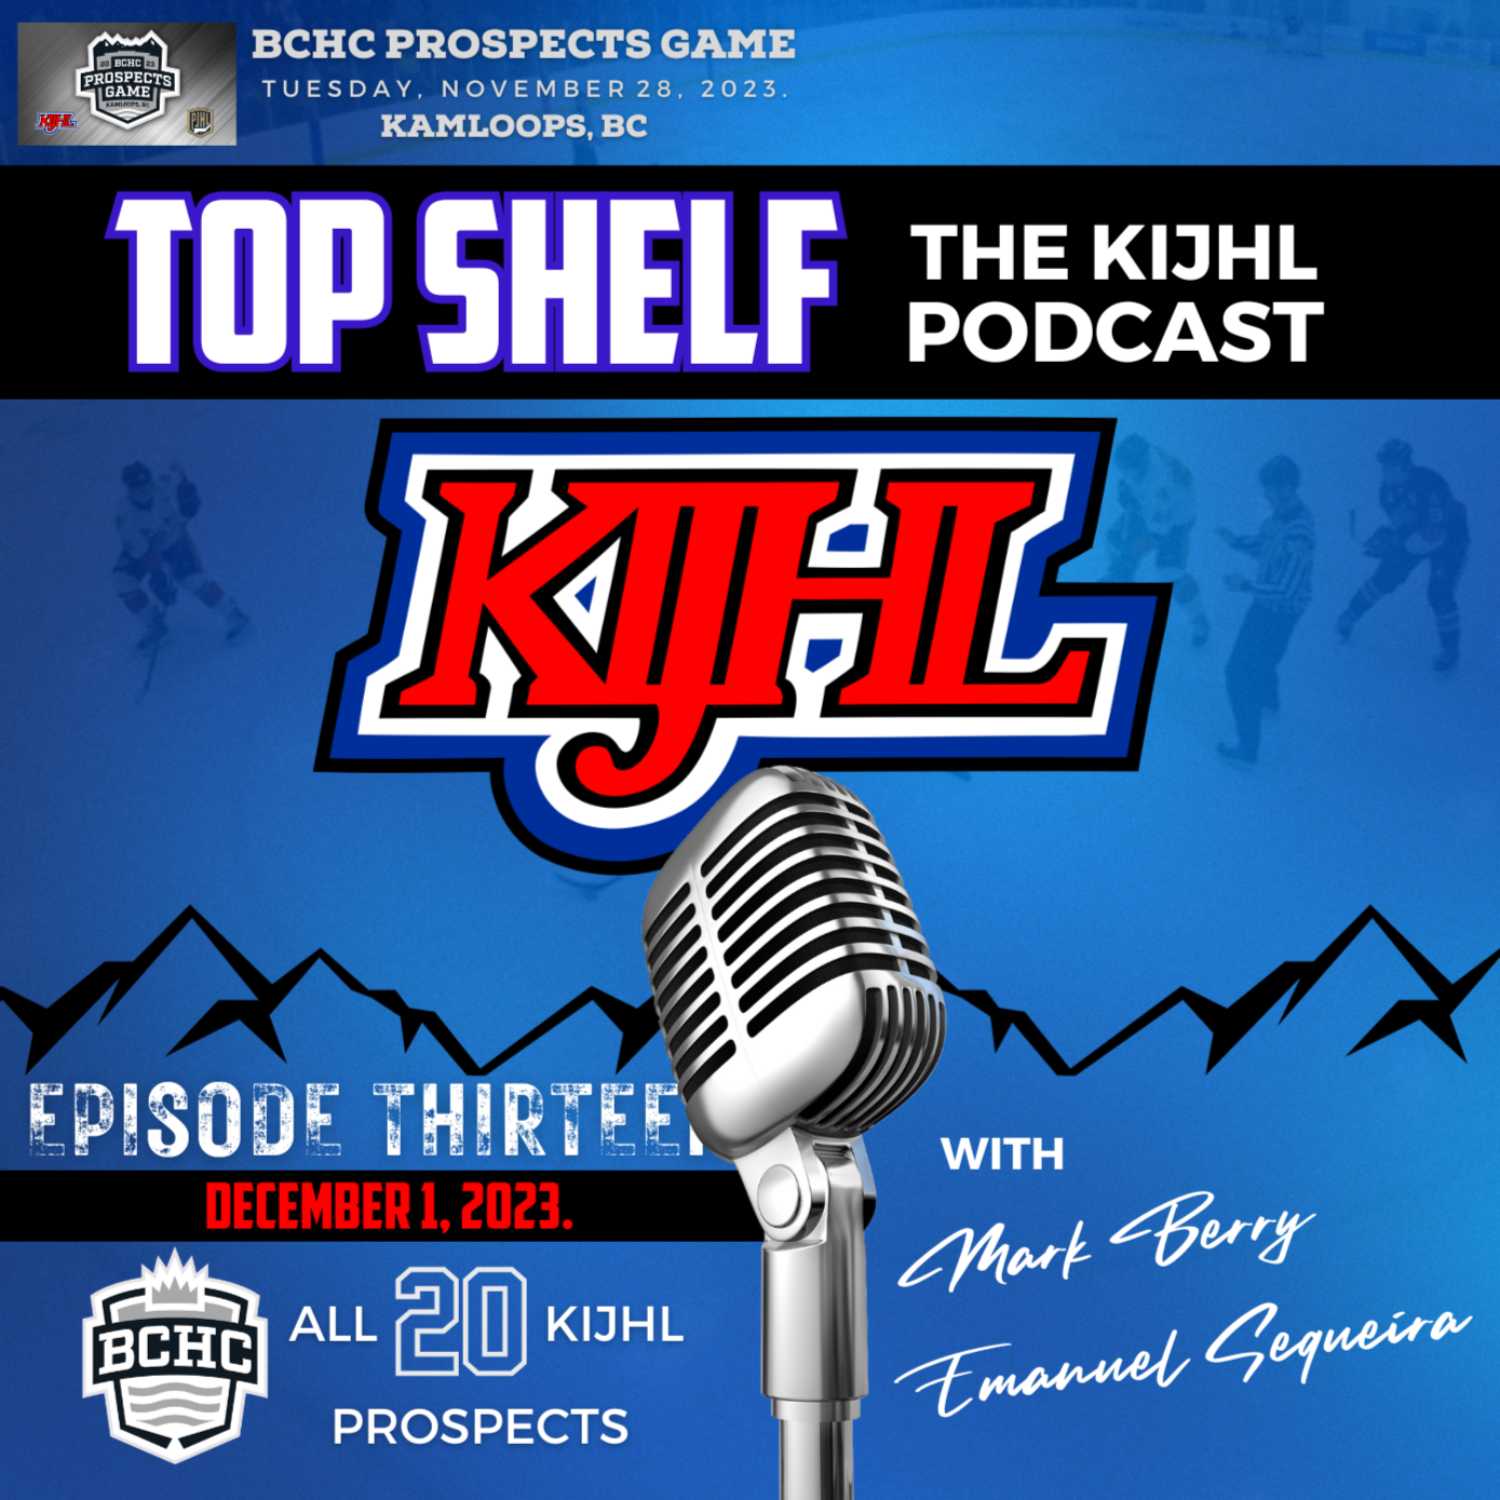 Top Shelf: The KIJHL Podcast - S2 E13 - December 1 - All 20 KIJHL Prospects